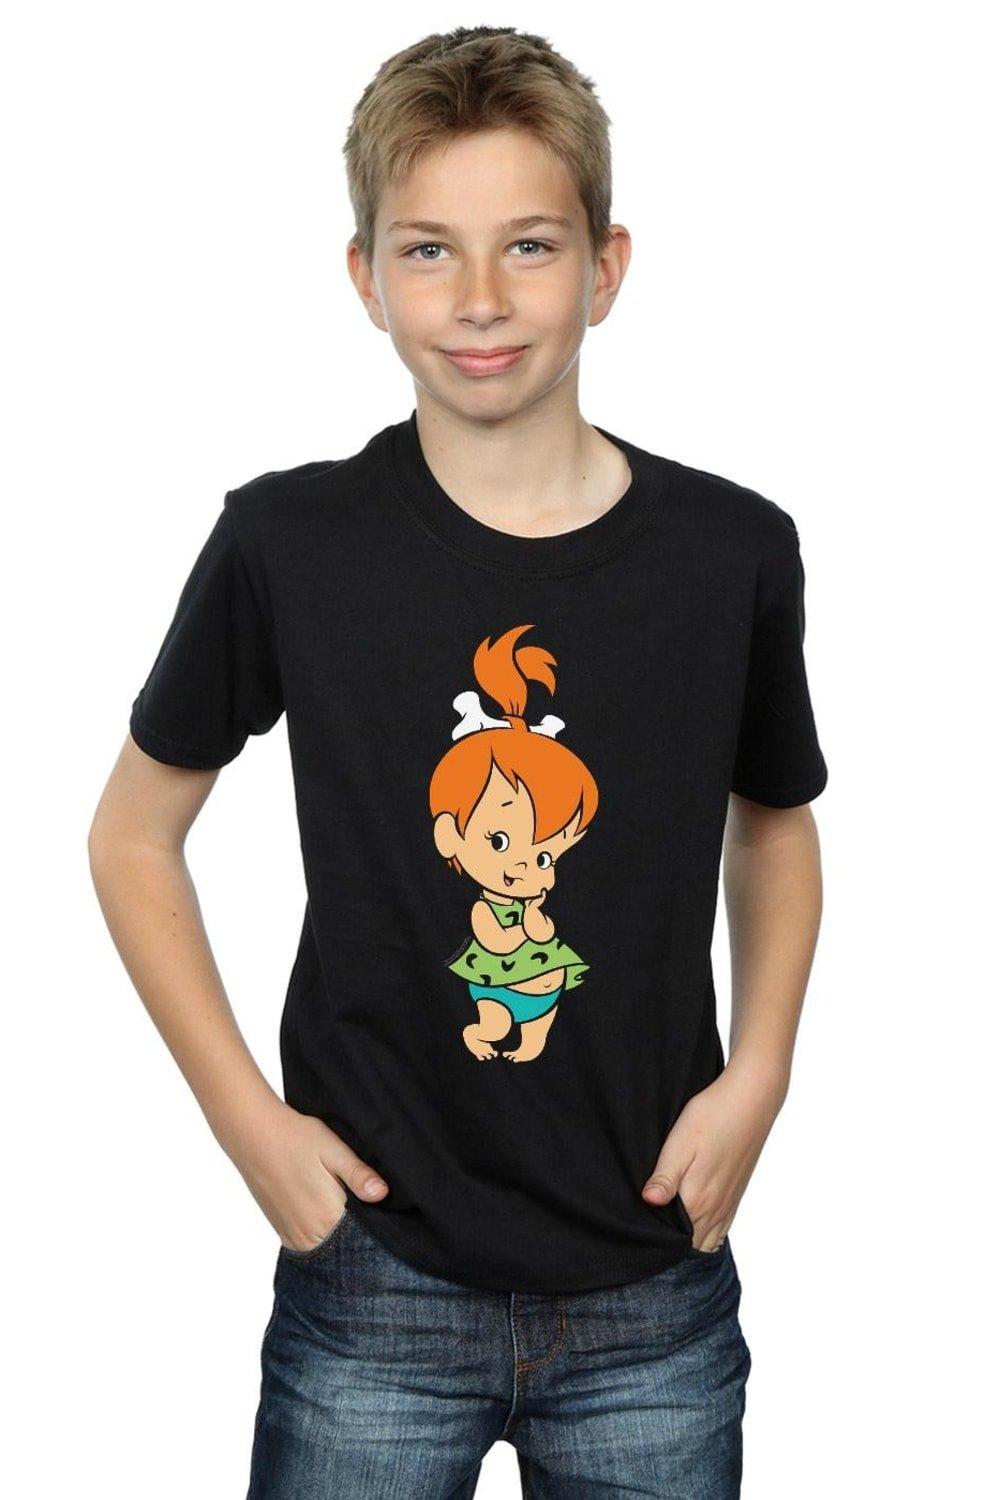 Pebbles Flintstone T-Shirt